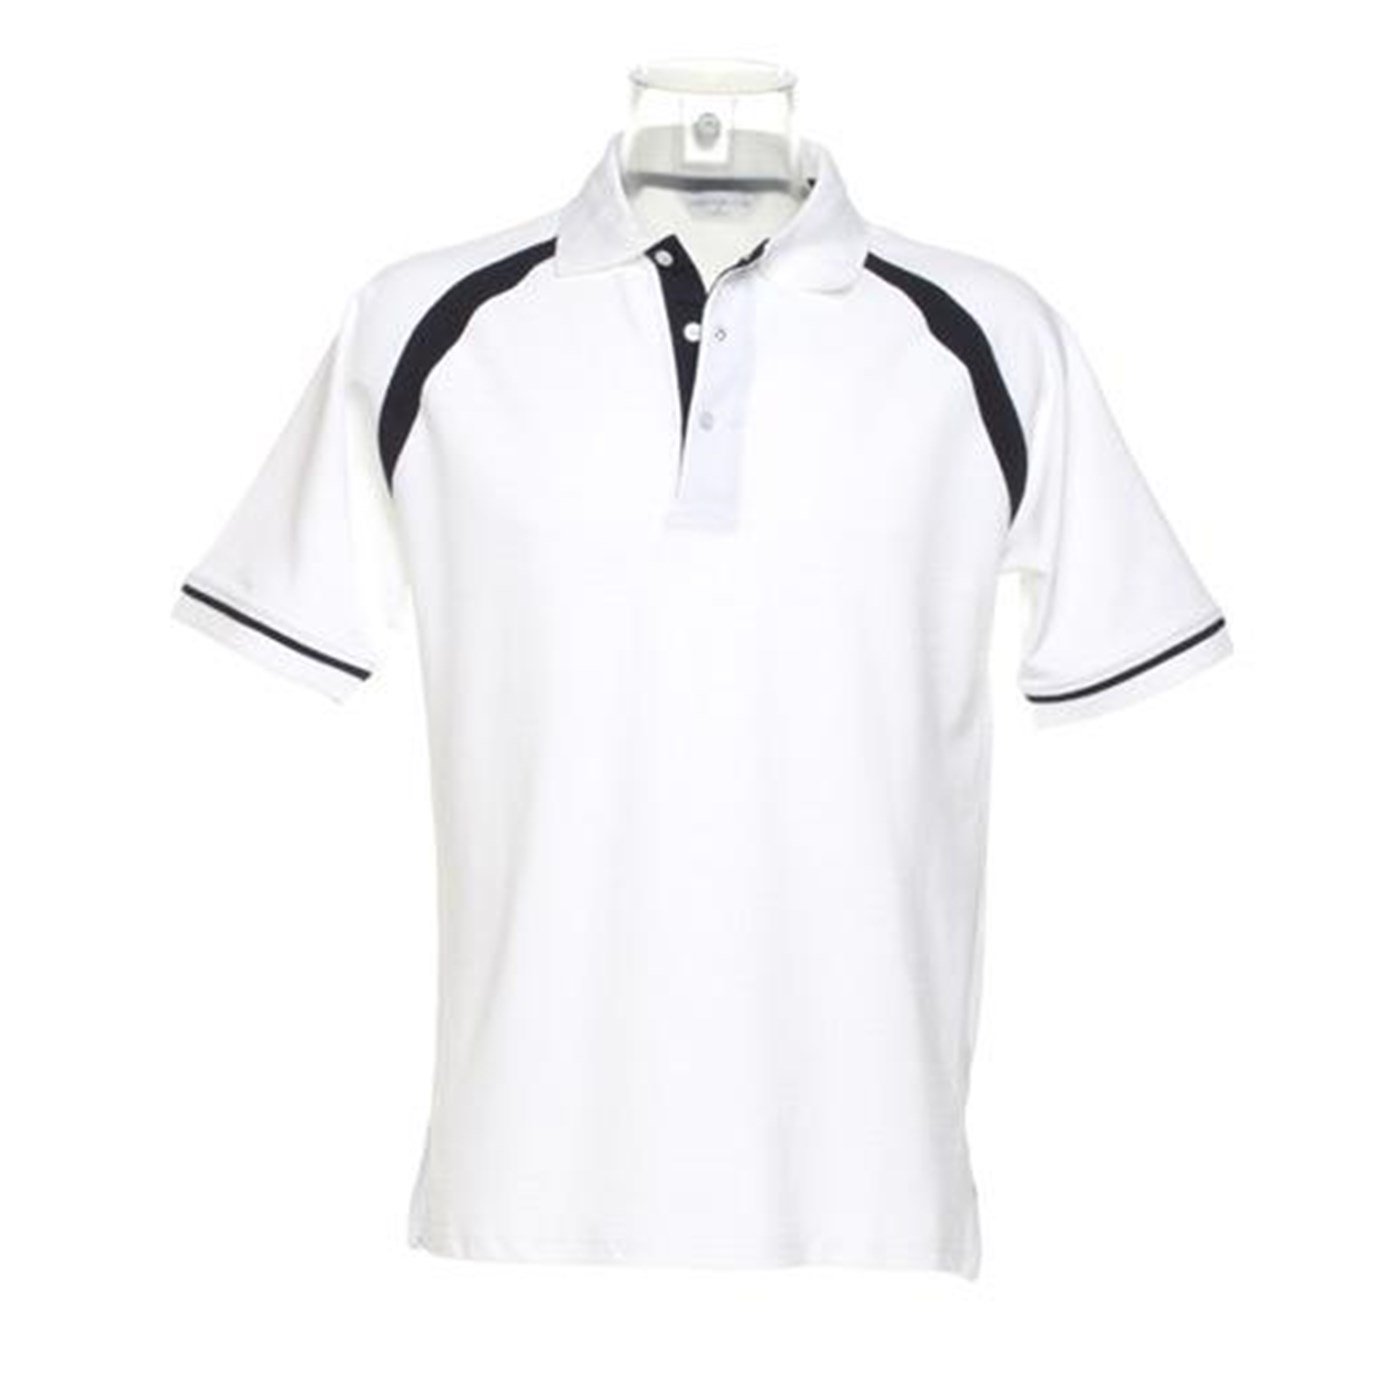 KK615 Kustom Kit Men/'s Oak Hill Polo Shirt Raglan Sleeves Work Wear Casual Top